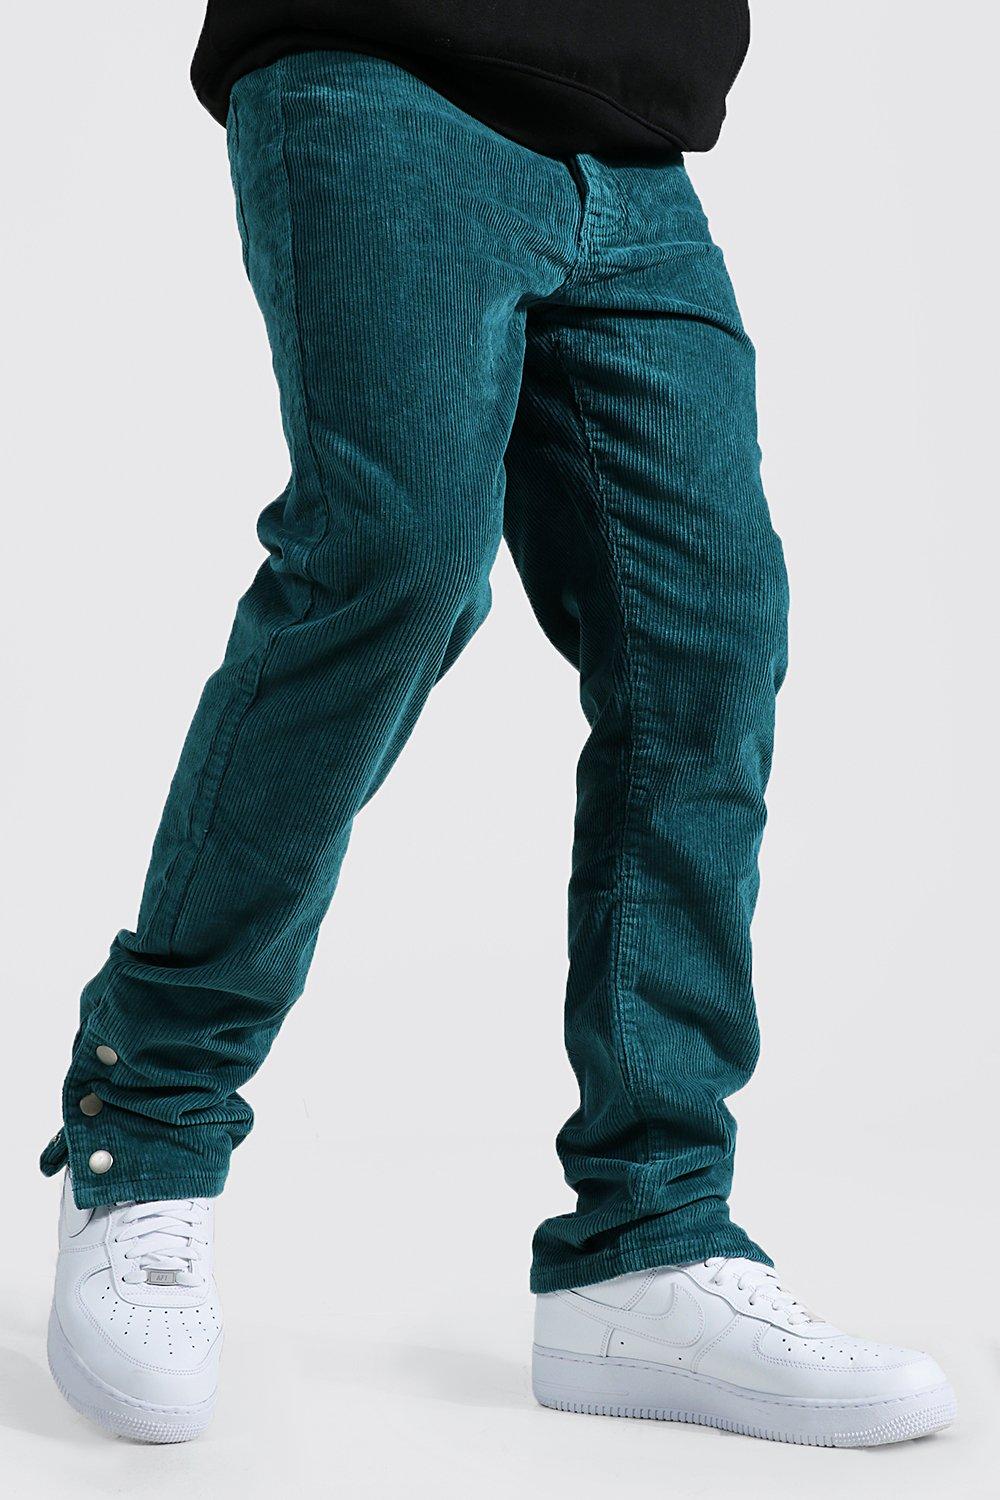 HTOOHTOOH Mens Fashion Slim Fit Comfort Stretch Straight Leg Long Pants 